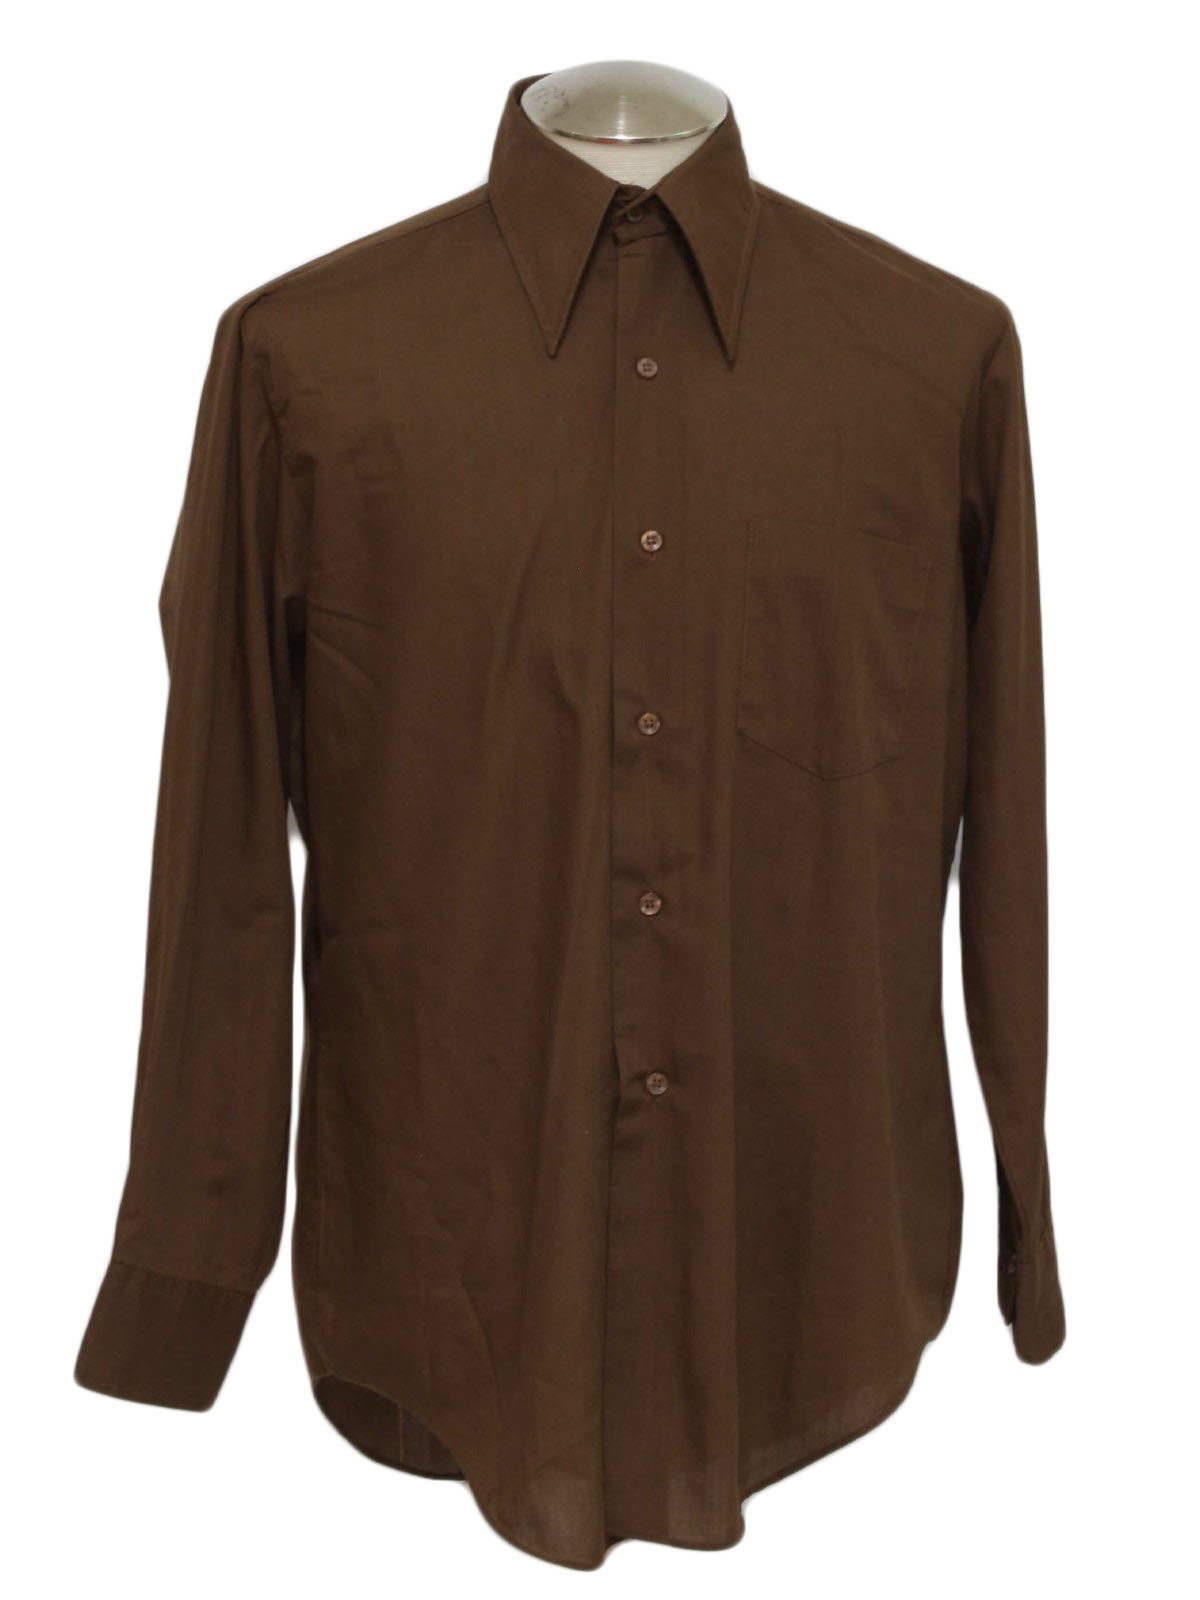 chocolate brown button up shirt